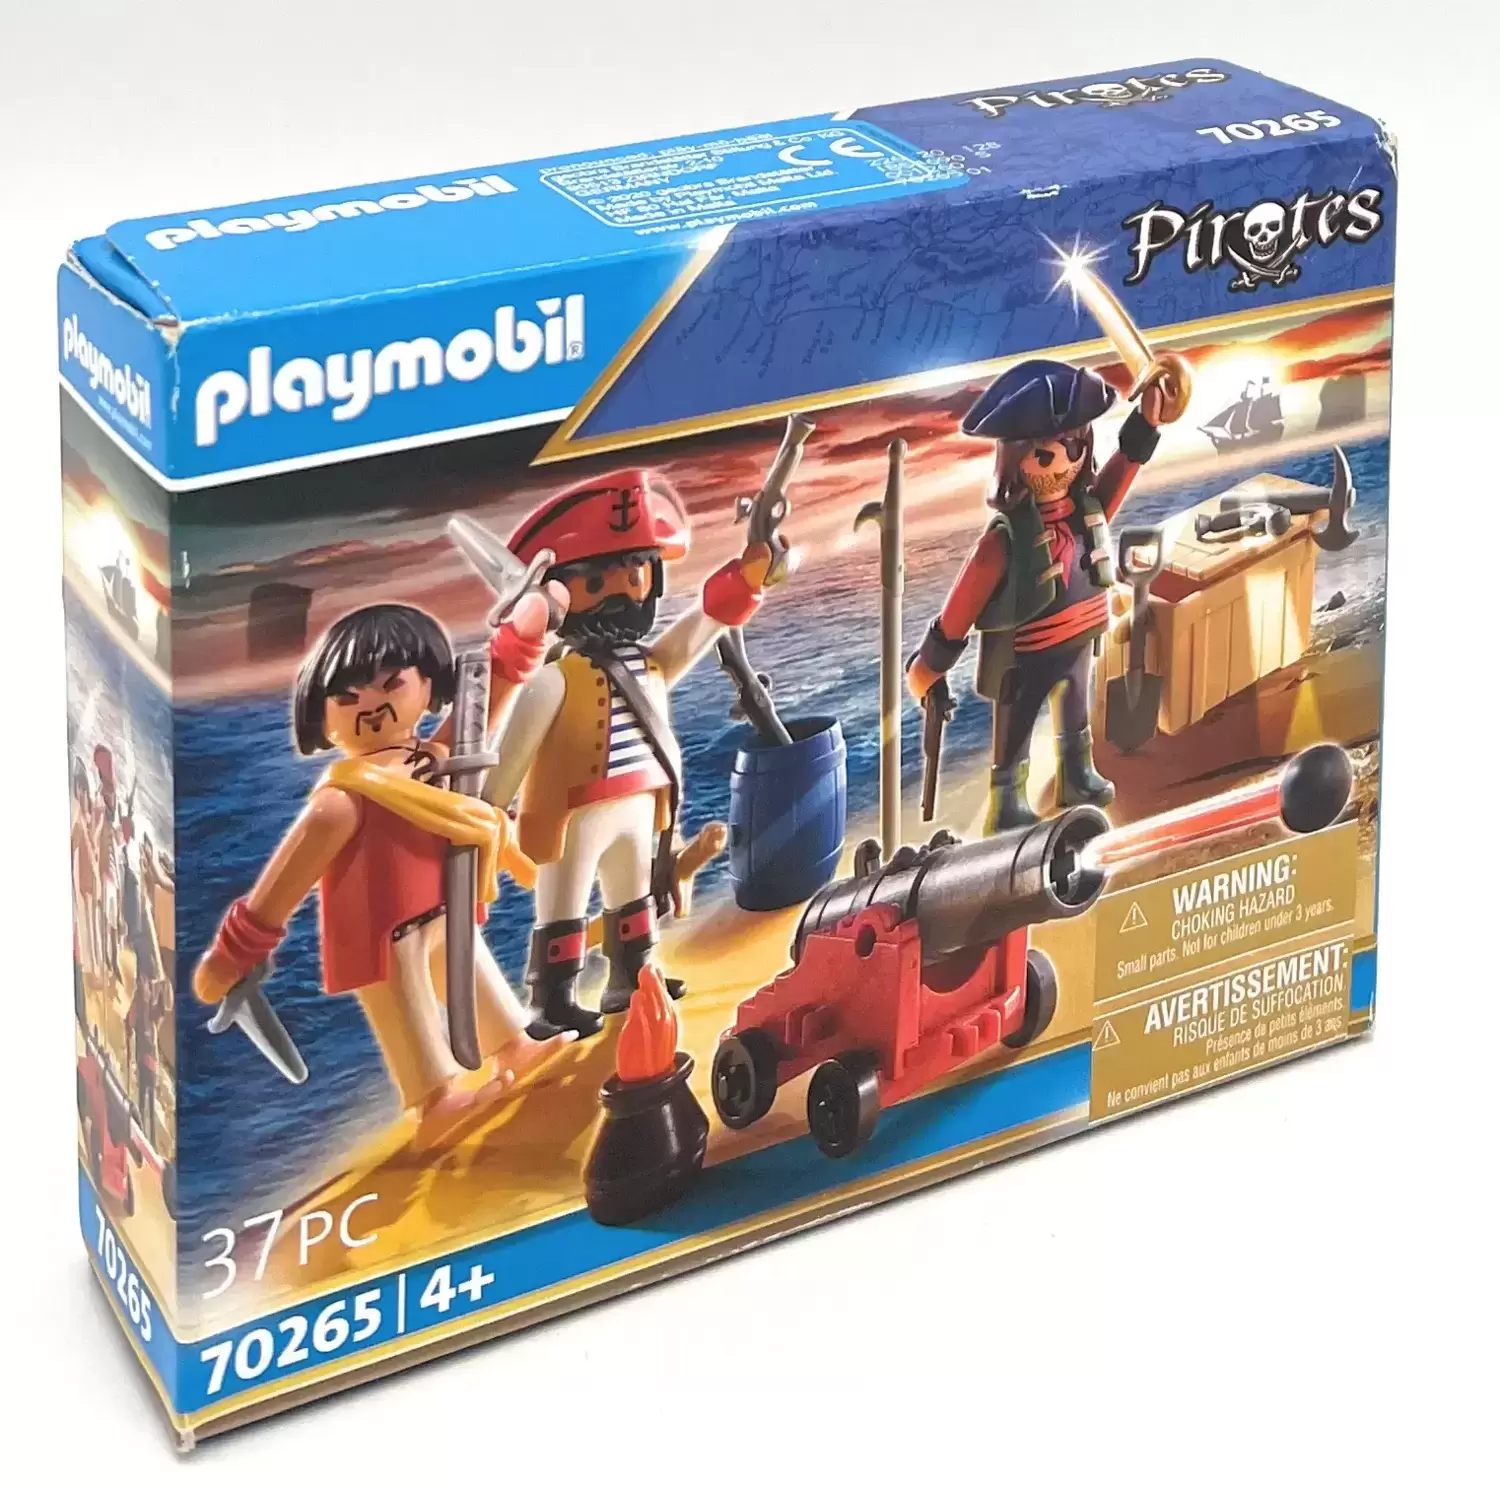 PLAYMOBIL Playmobil Pirates Redcoat Bastion - 70413 - Playmobil Pirates 